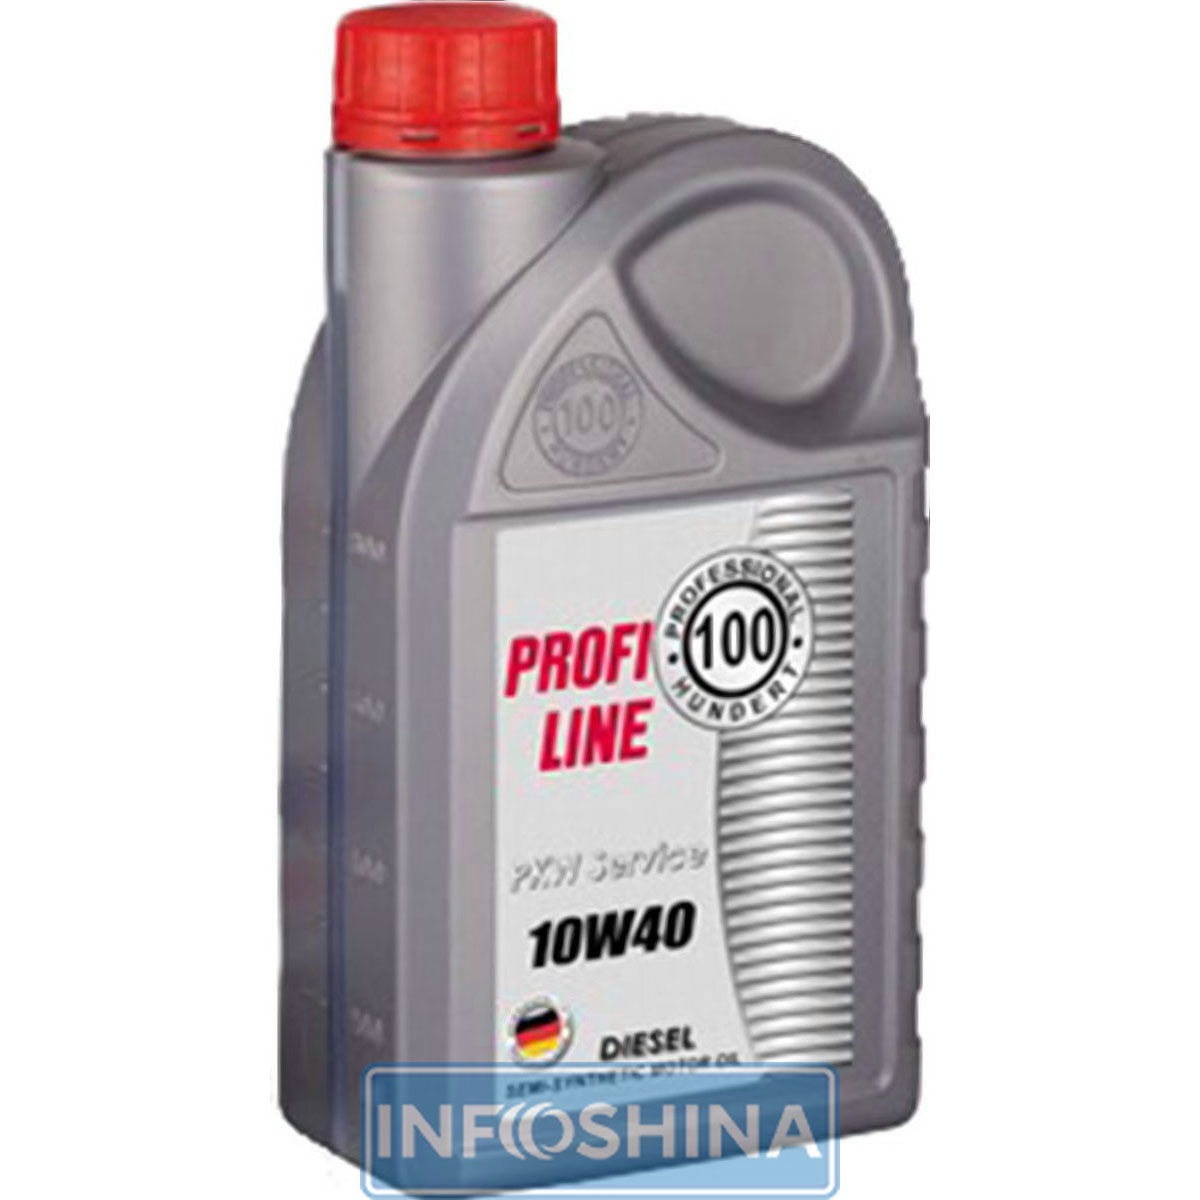 Professional Hundert Profi Line Diesel 10W-40